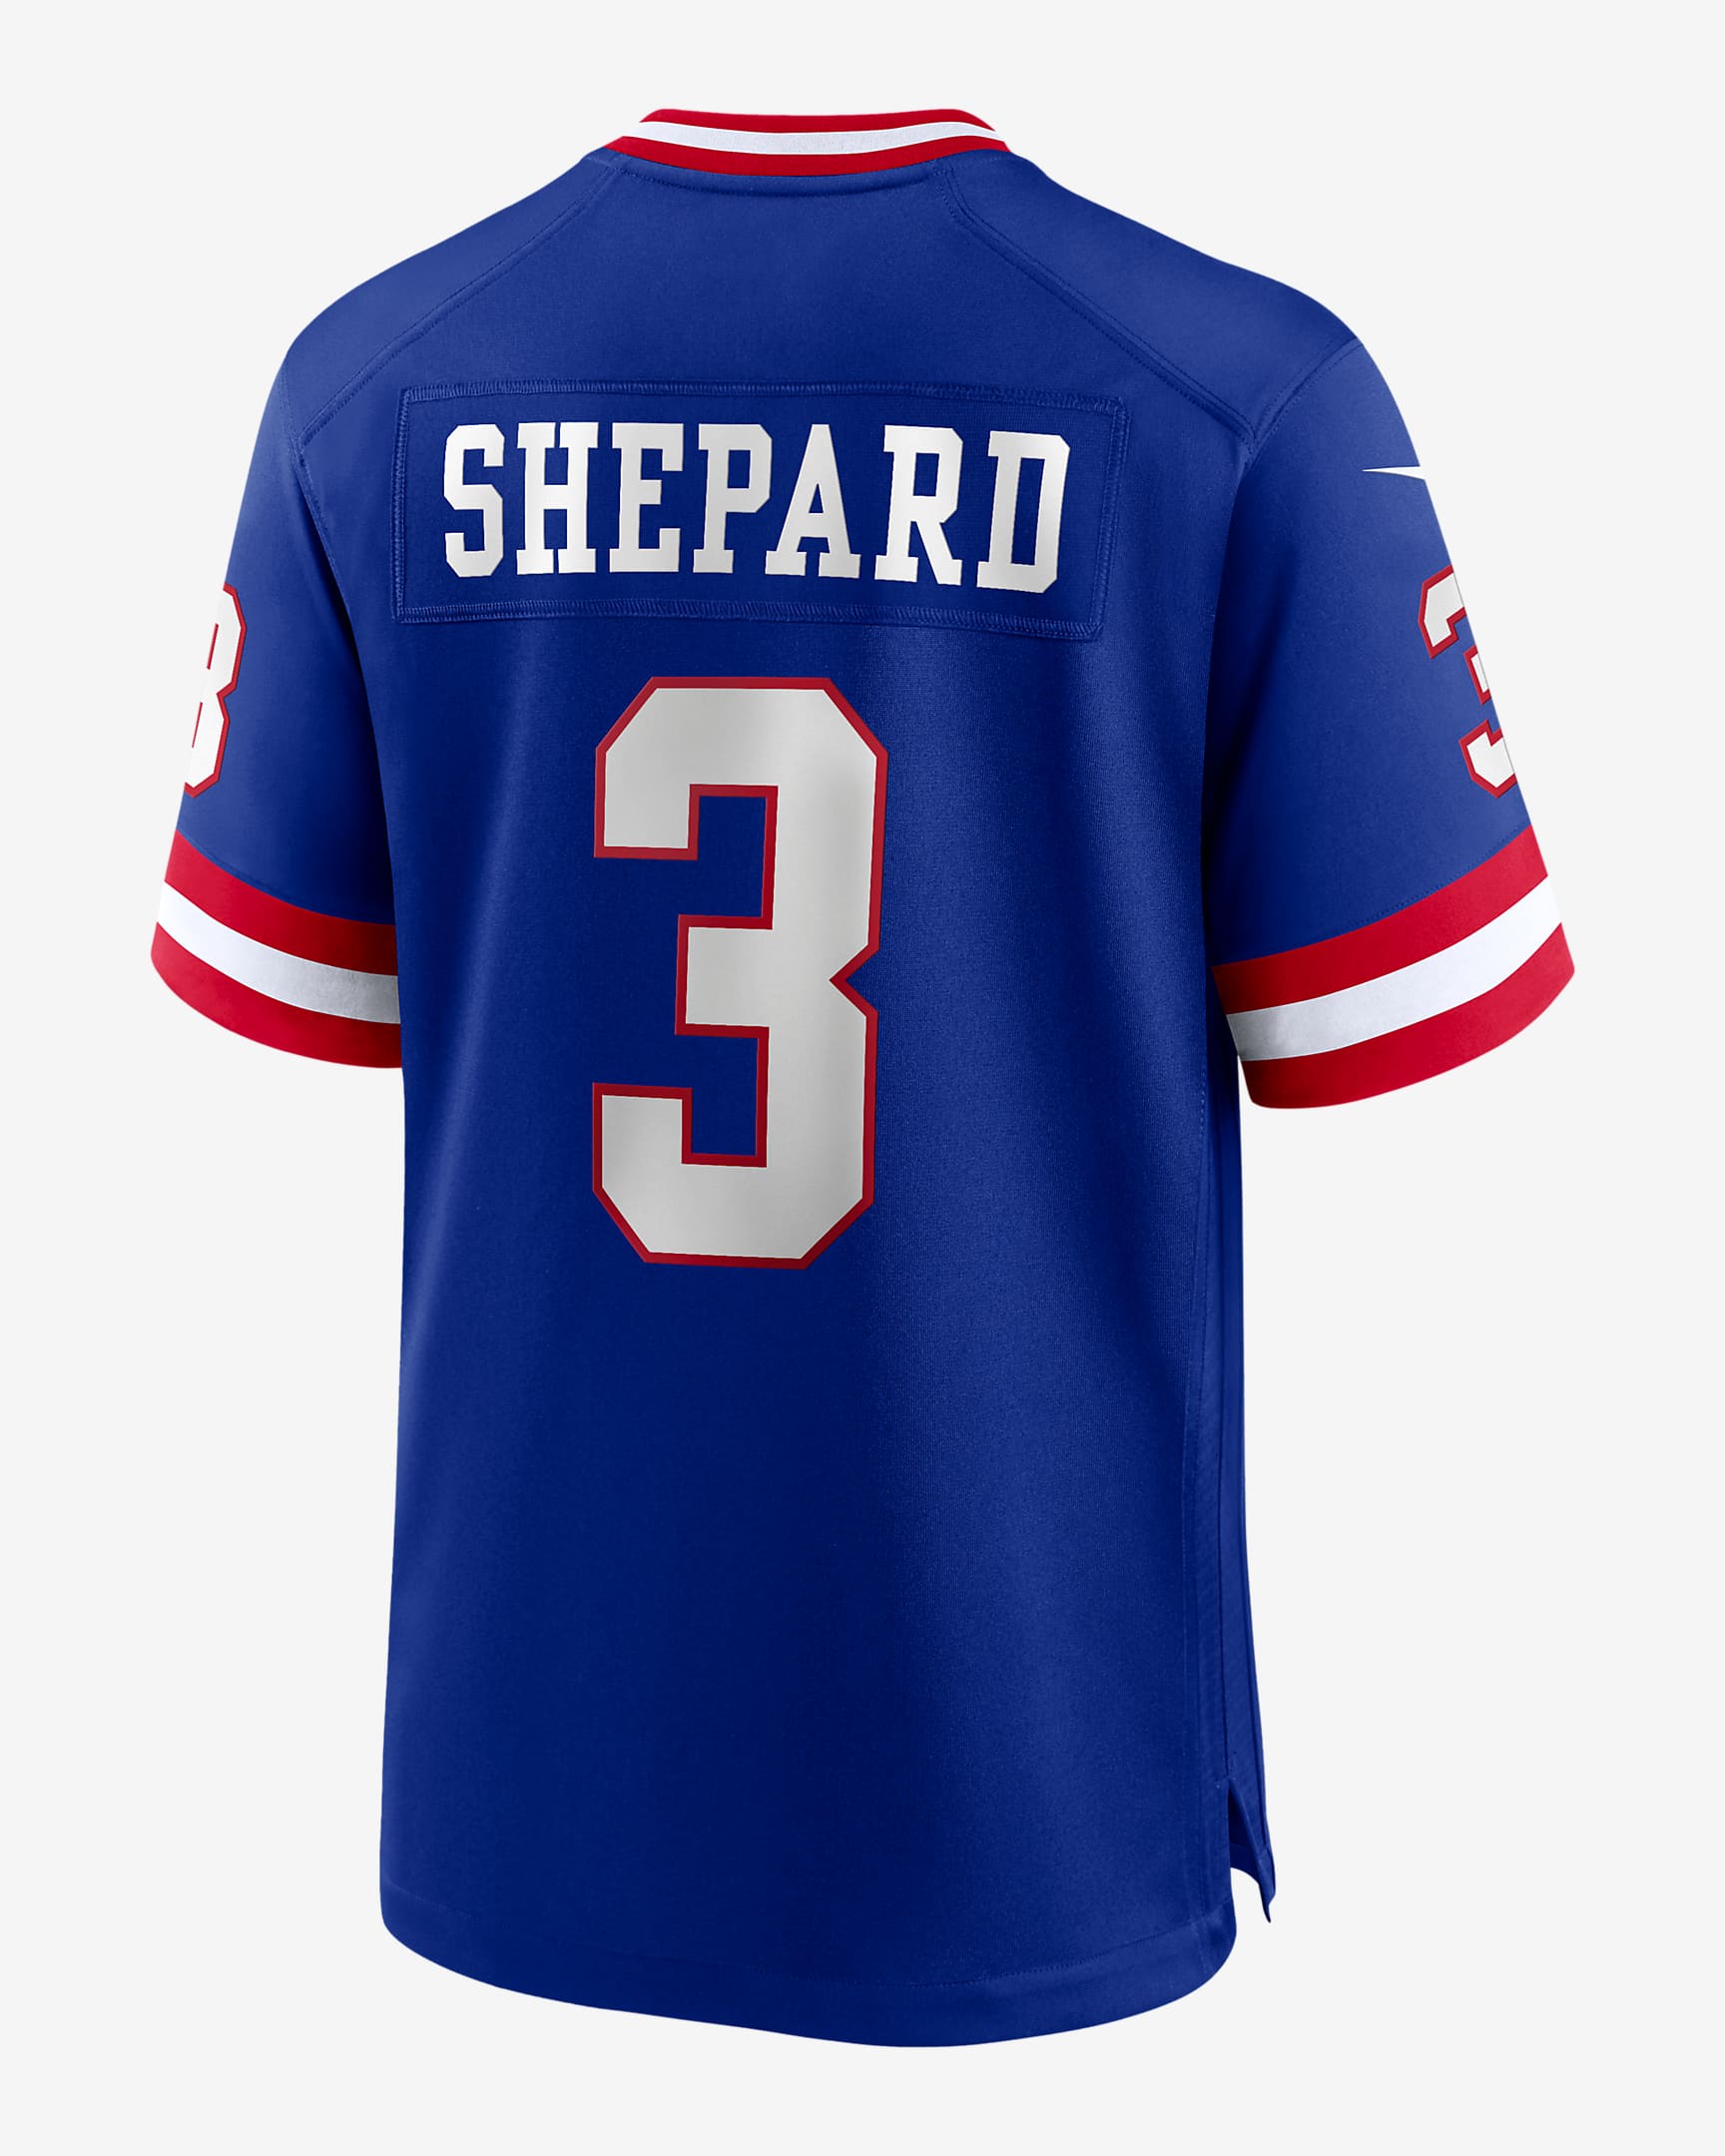 NFL New York Giants (Sterling Shepard) Men's Game Football Jersey. Nike.com